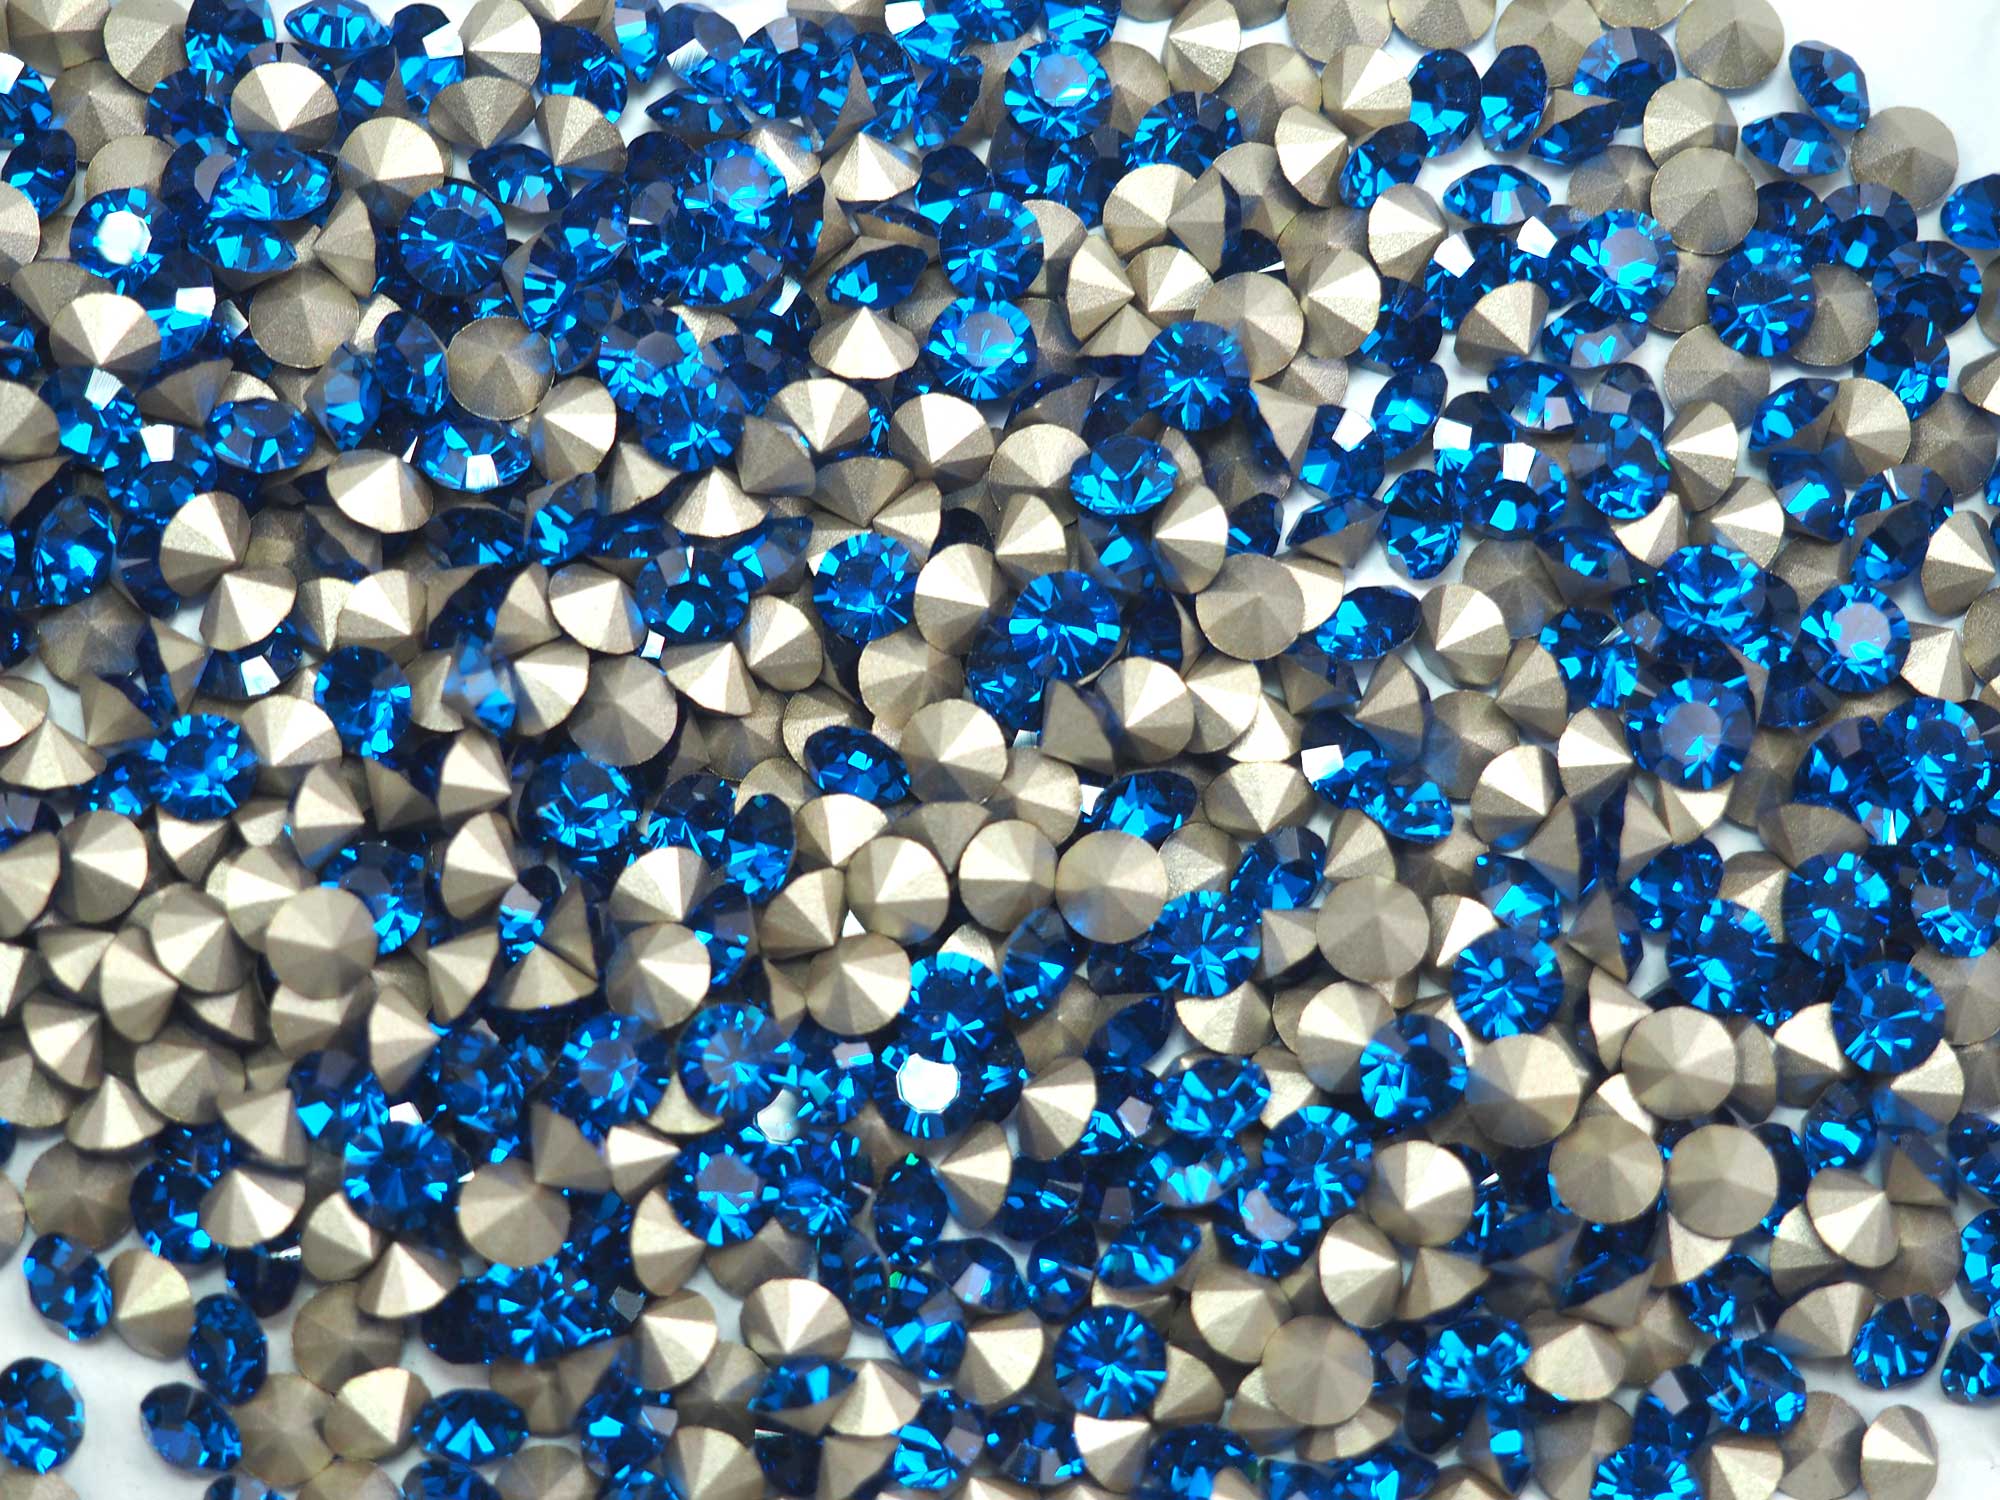 Capri Blue, Preciosa Genuine Czech MAXIMA Pointed Back Chatons in size ss20 (5mm), 72 pieces, Silver Foiled, P624